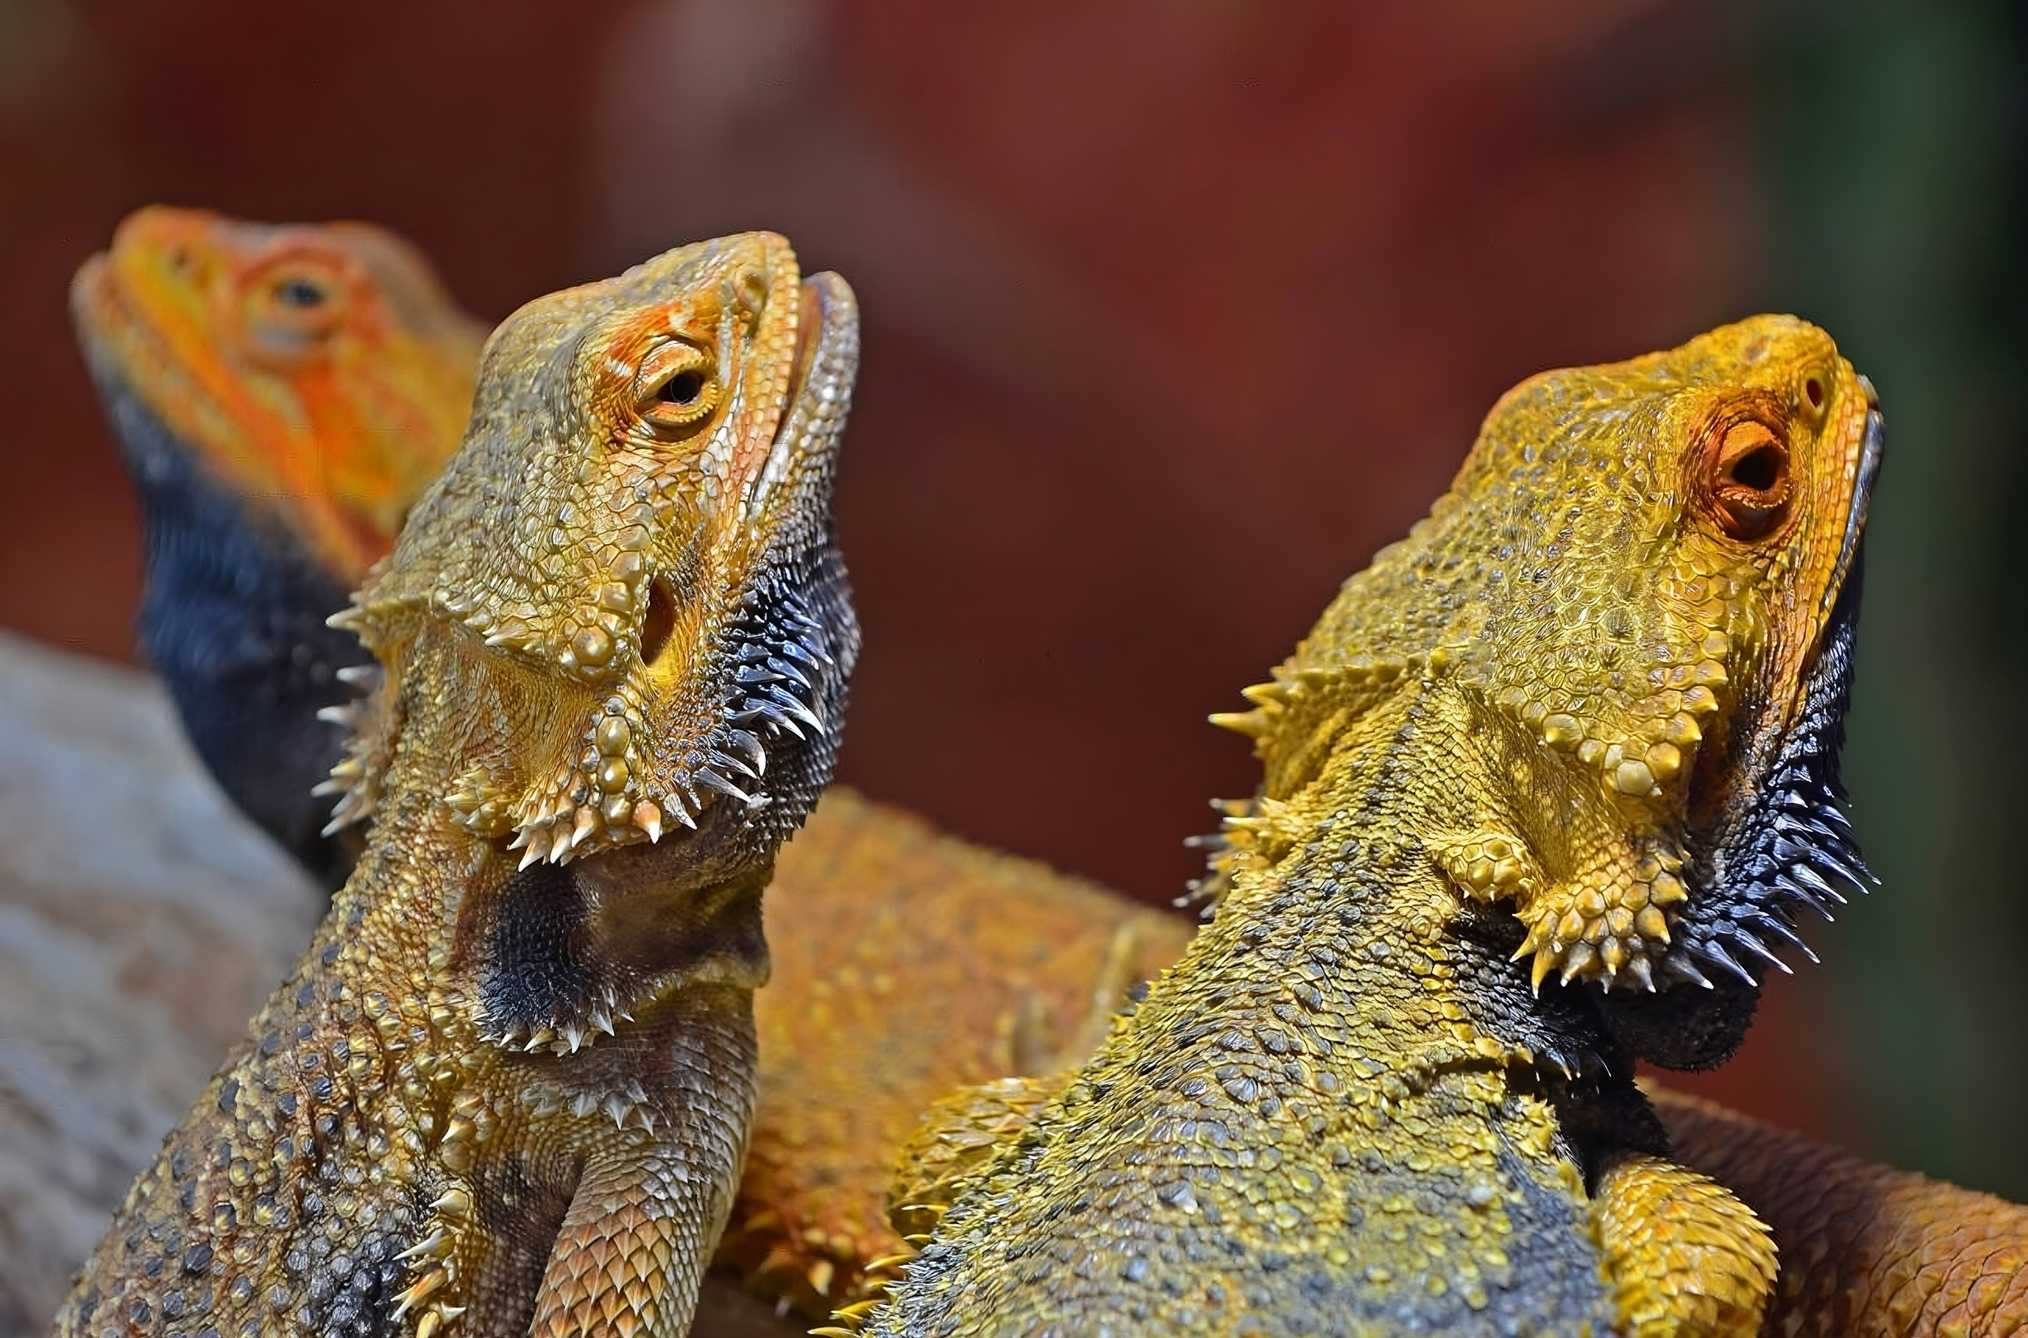 Bearded Dragons from Australia,also known as Pogona,sunbathing.
